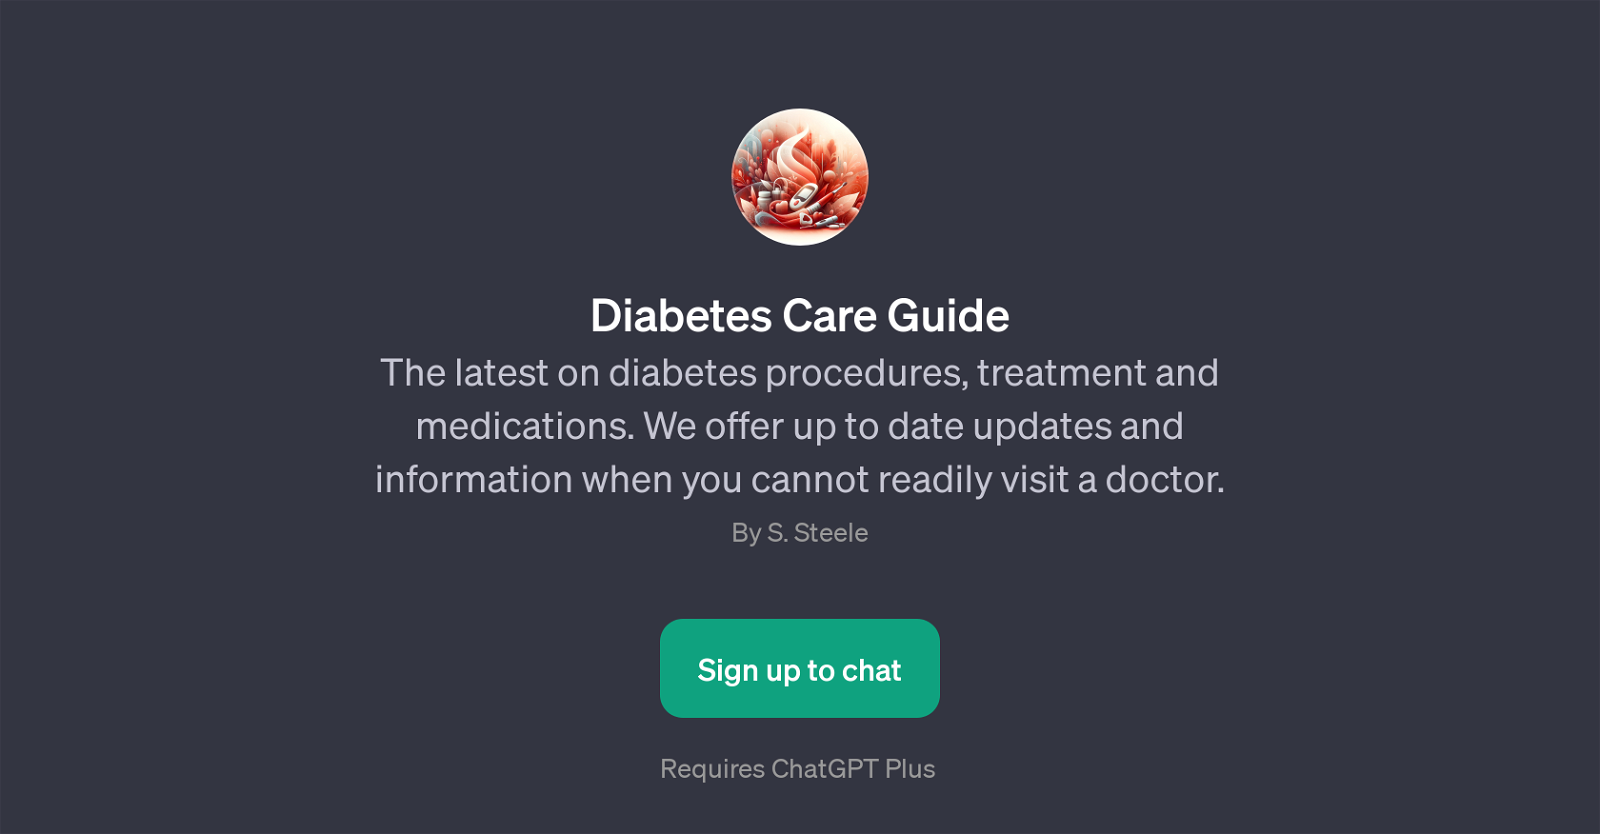 Diabetes Care Guide website